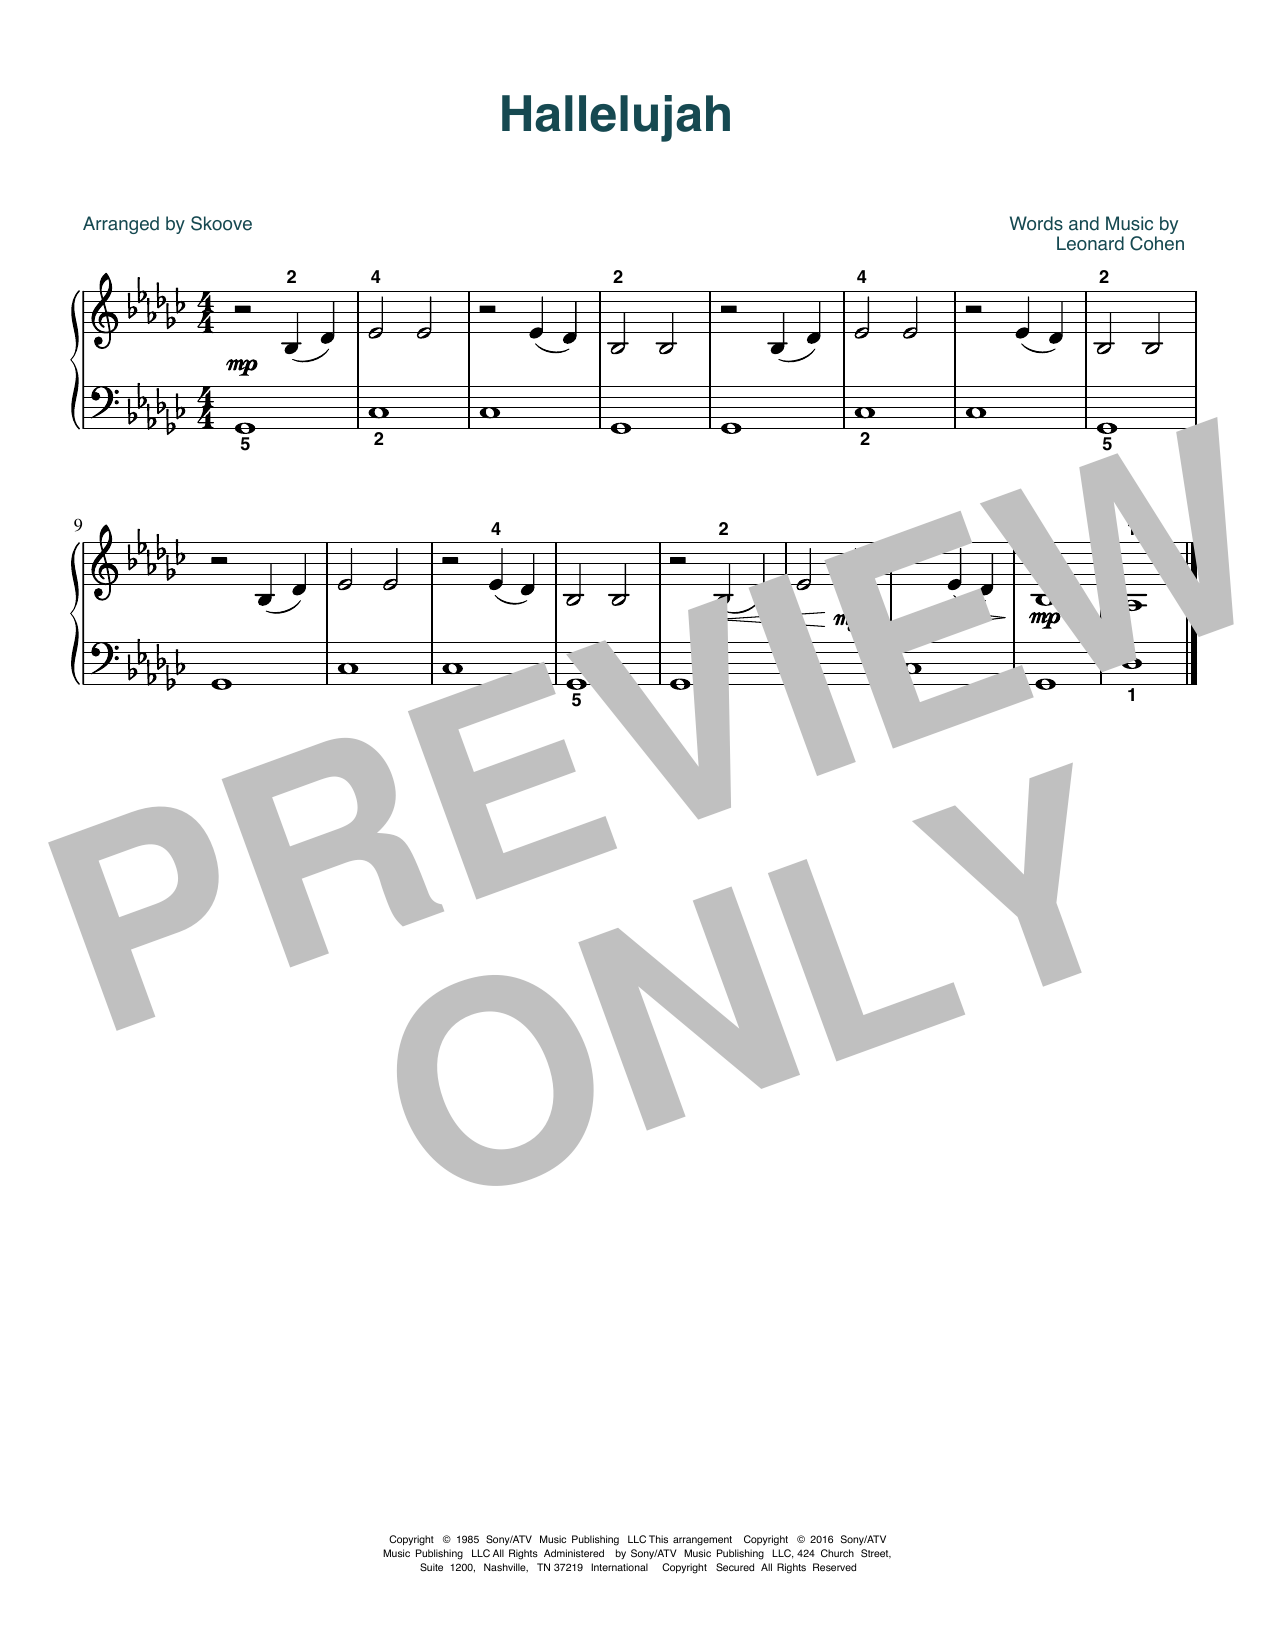 Leonard Cohen Hallelujah (arr. Skoove) Sheet Music Notes & Chords for Beginner Piano (Abridged) - Download or Print PDF